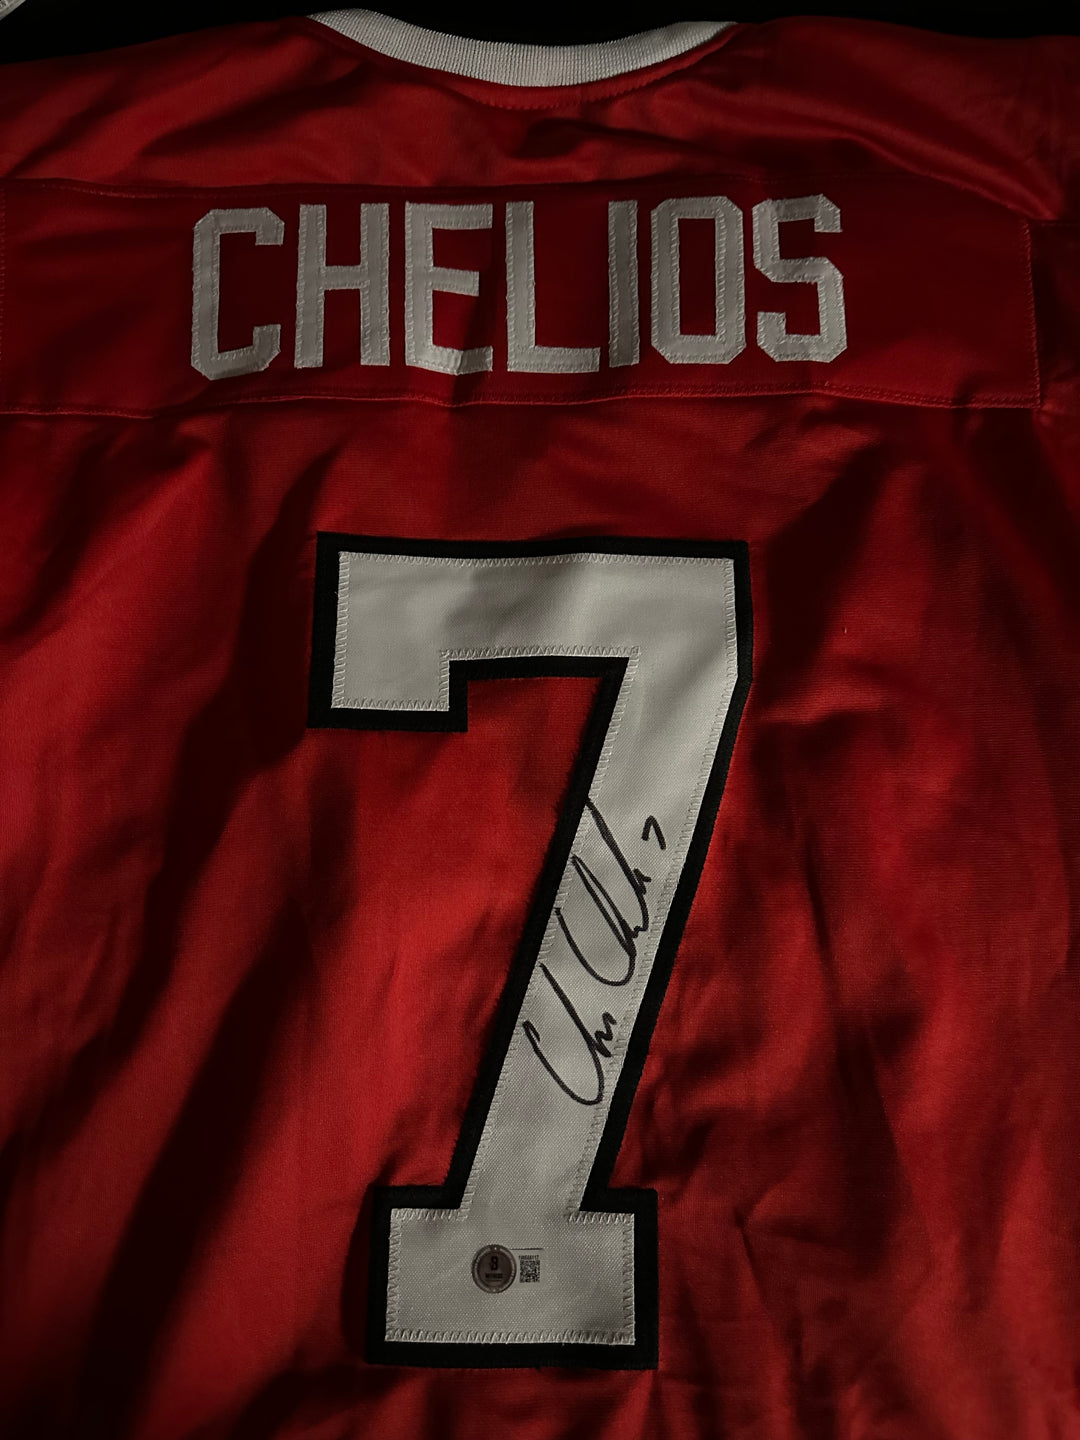 Chris Chelios signed custom Blackhawks jersey